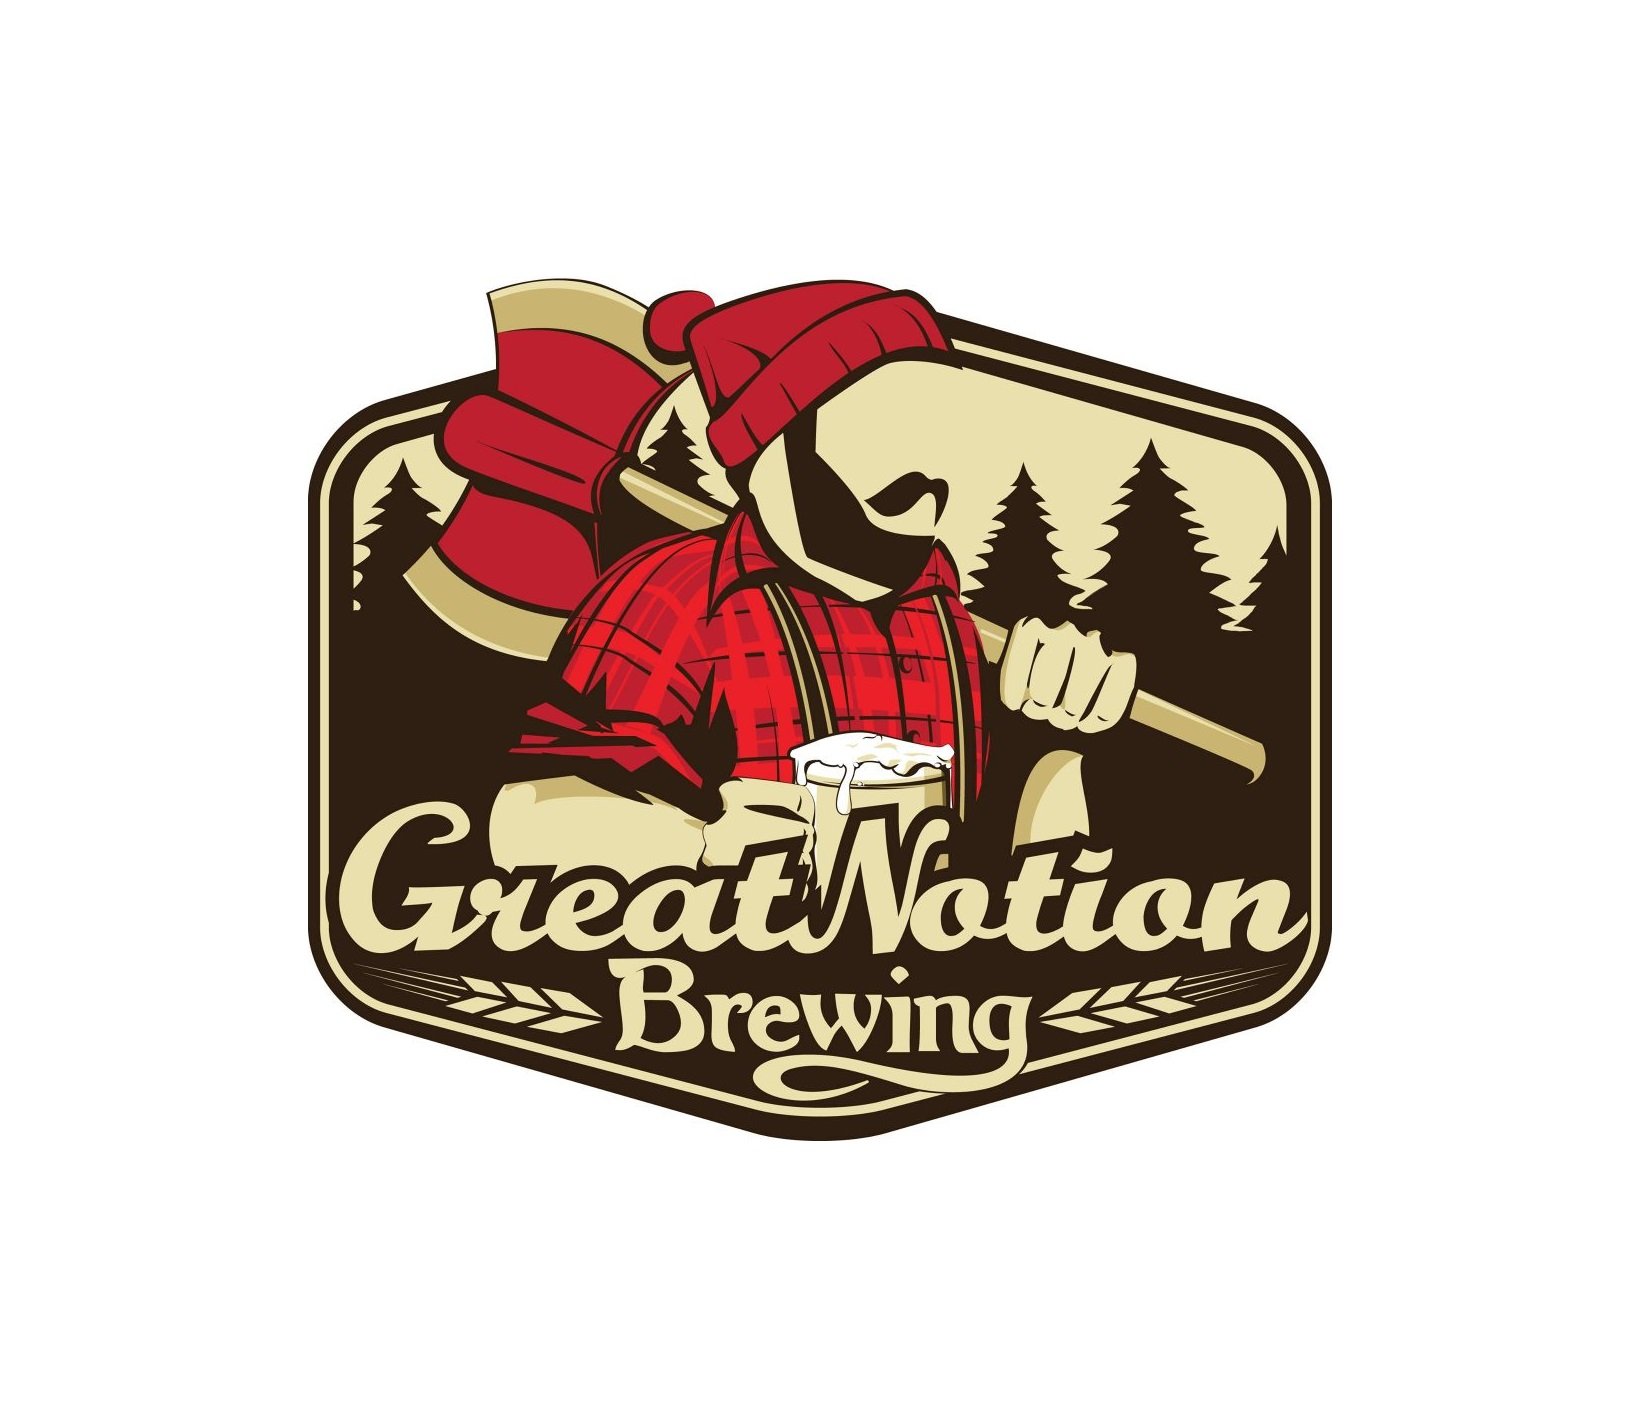 great notion beer